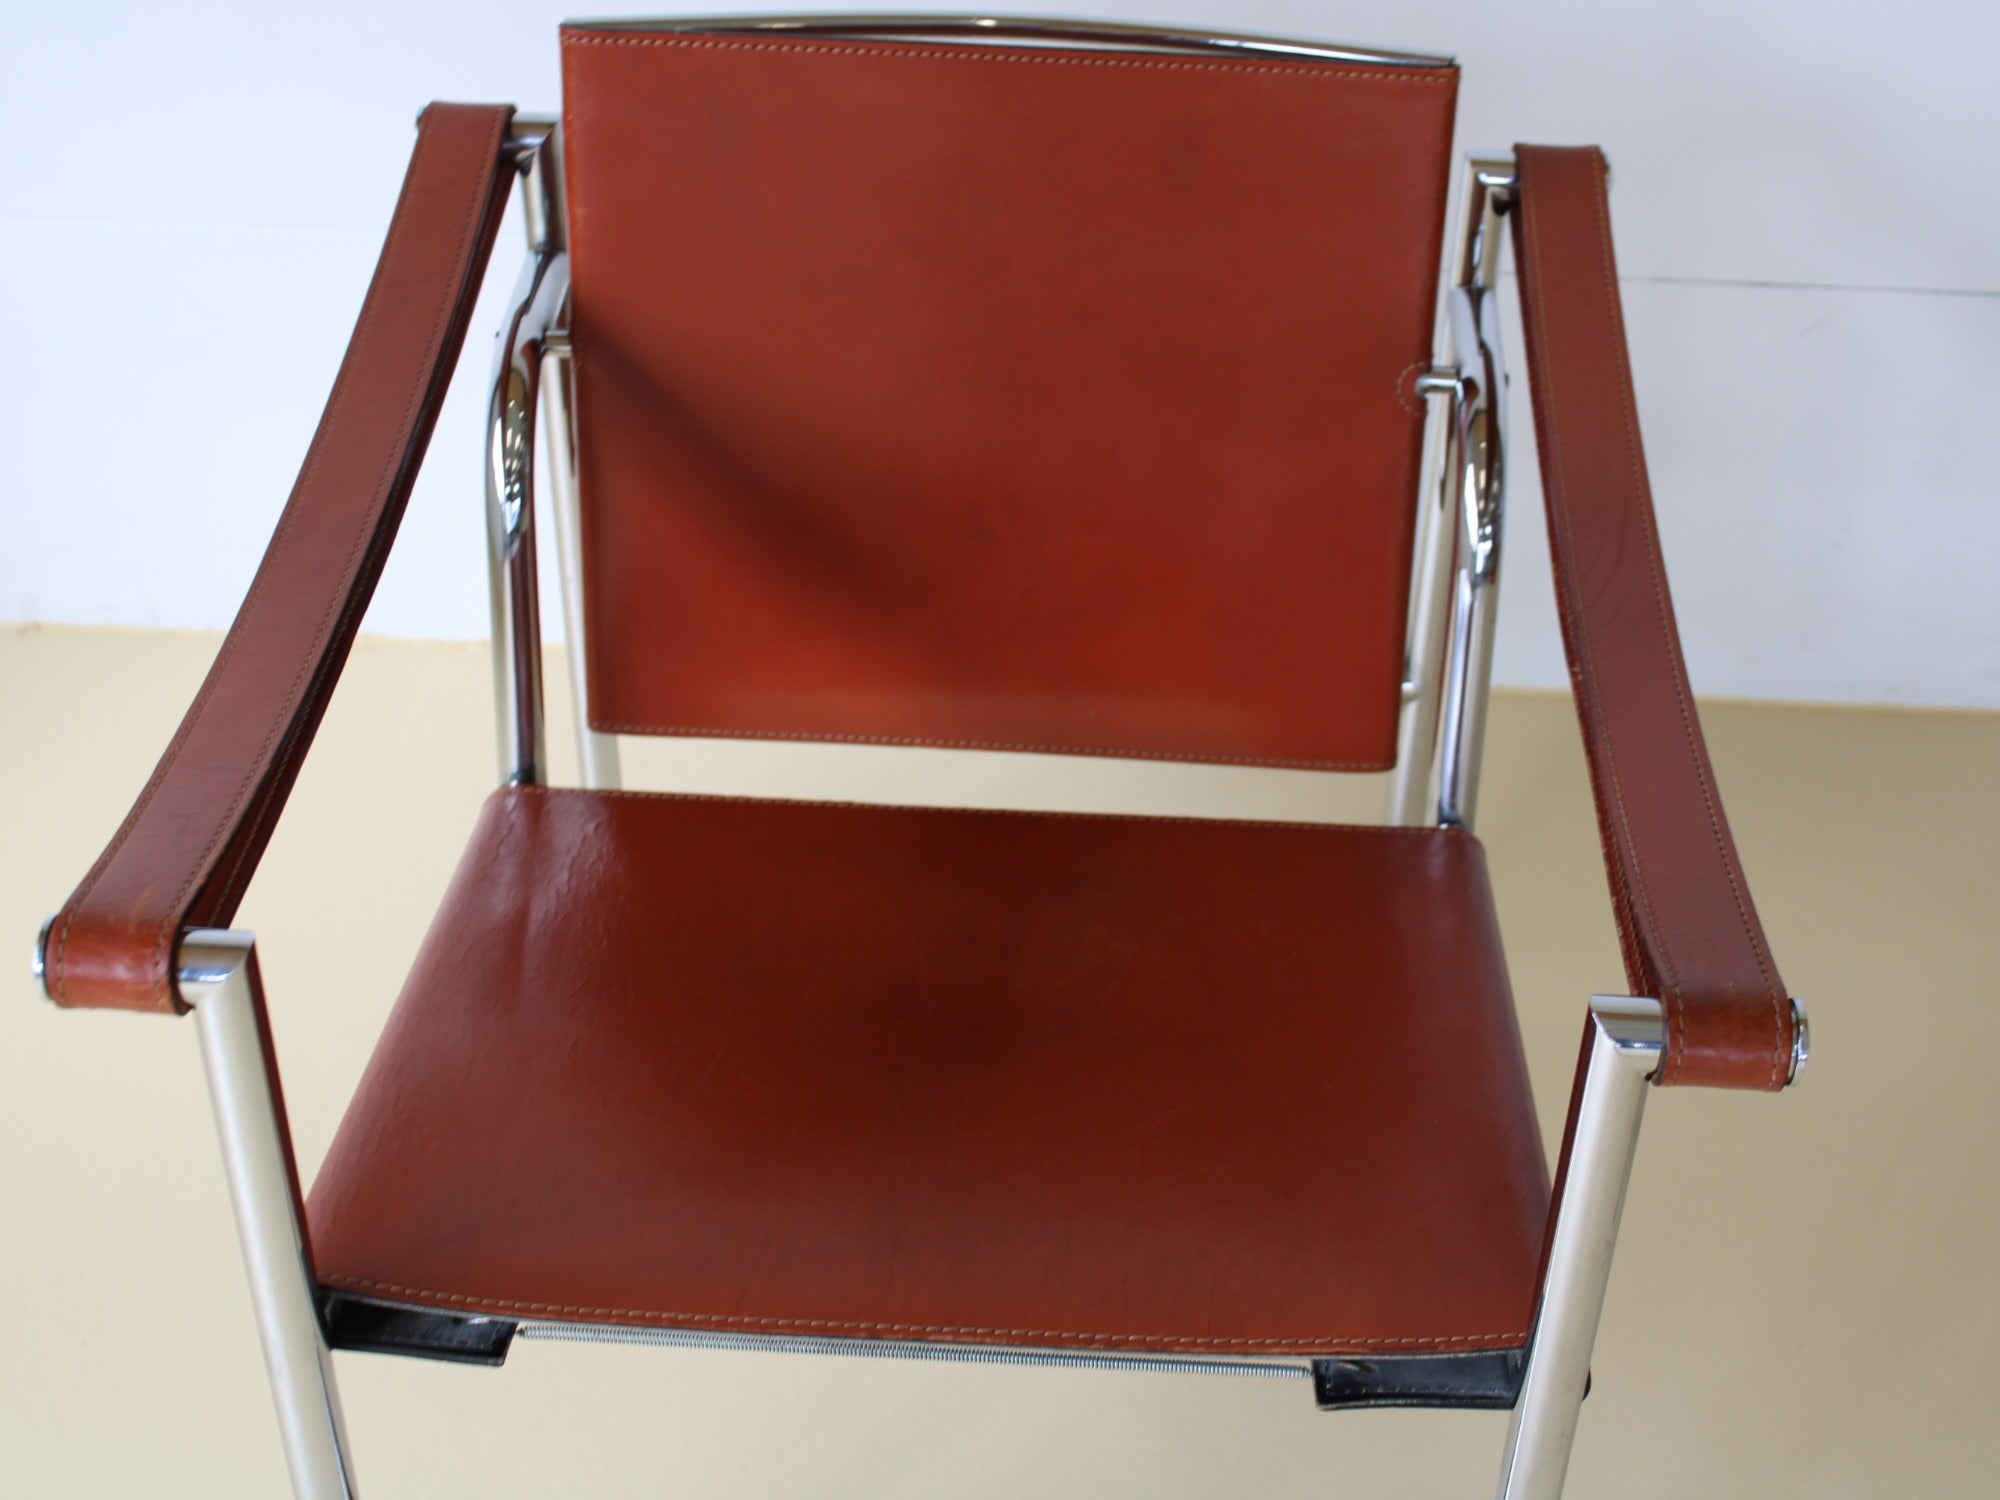 LC1 Sessel von Corbusier, Cassina